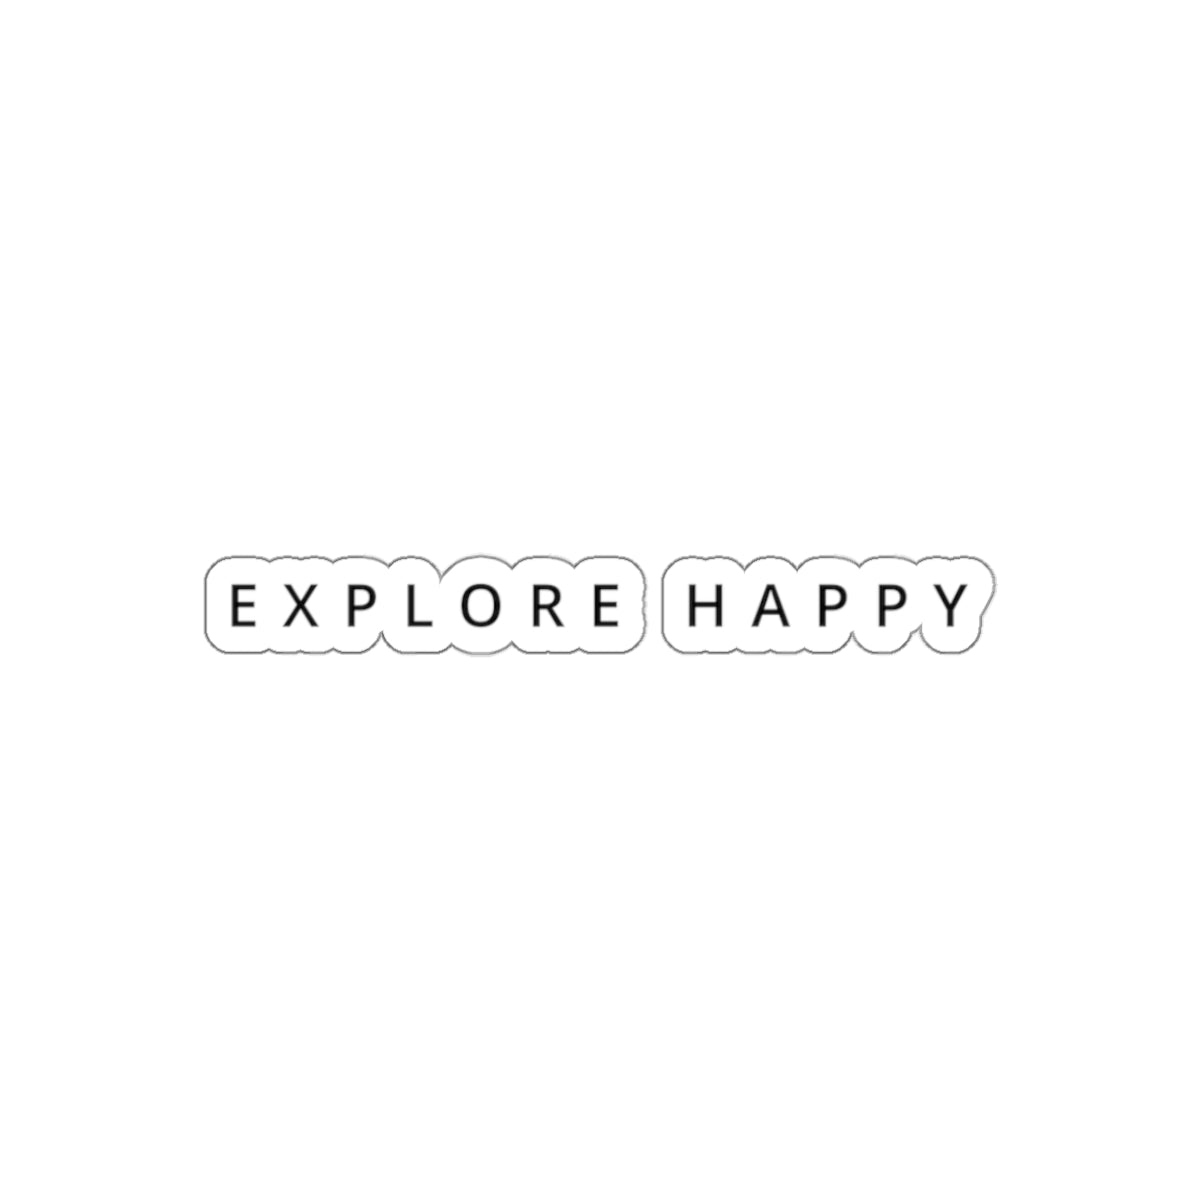 Explore Happy Stiker